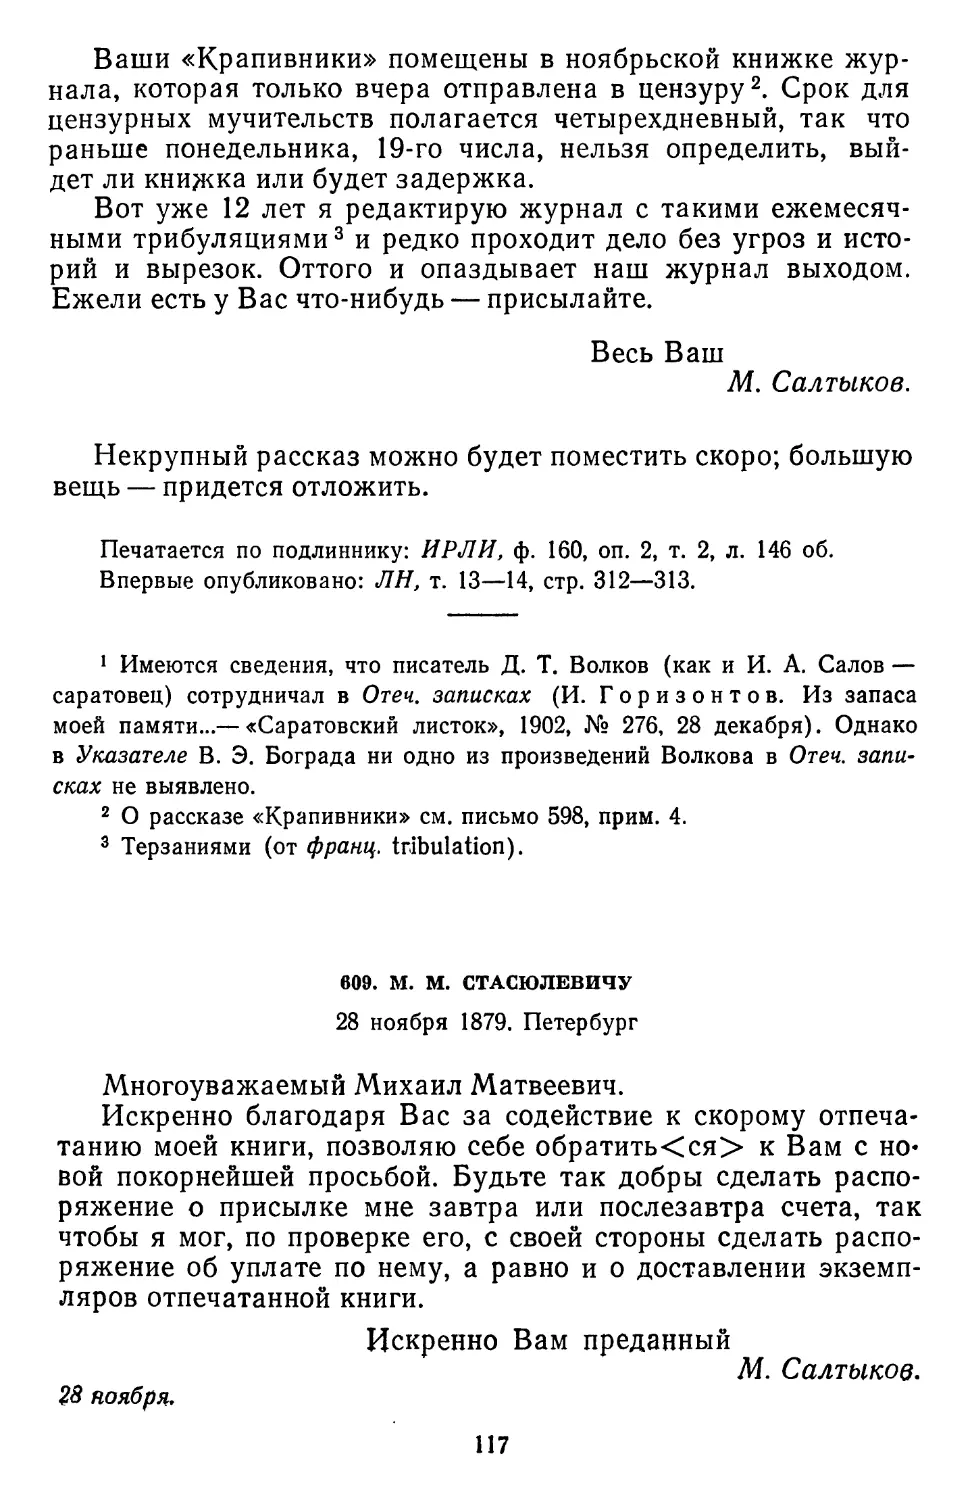 609.М.М.Стасюлевичу. 28 ноября1879.Петербург